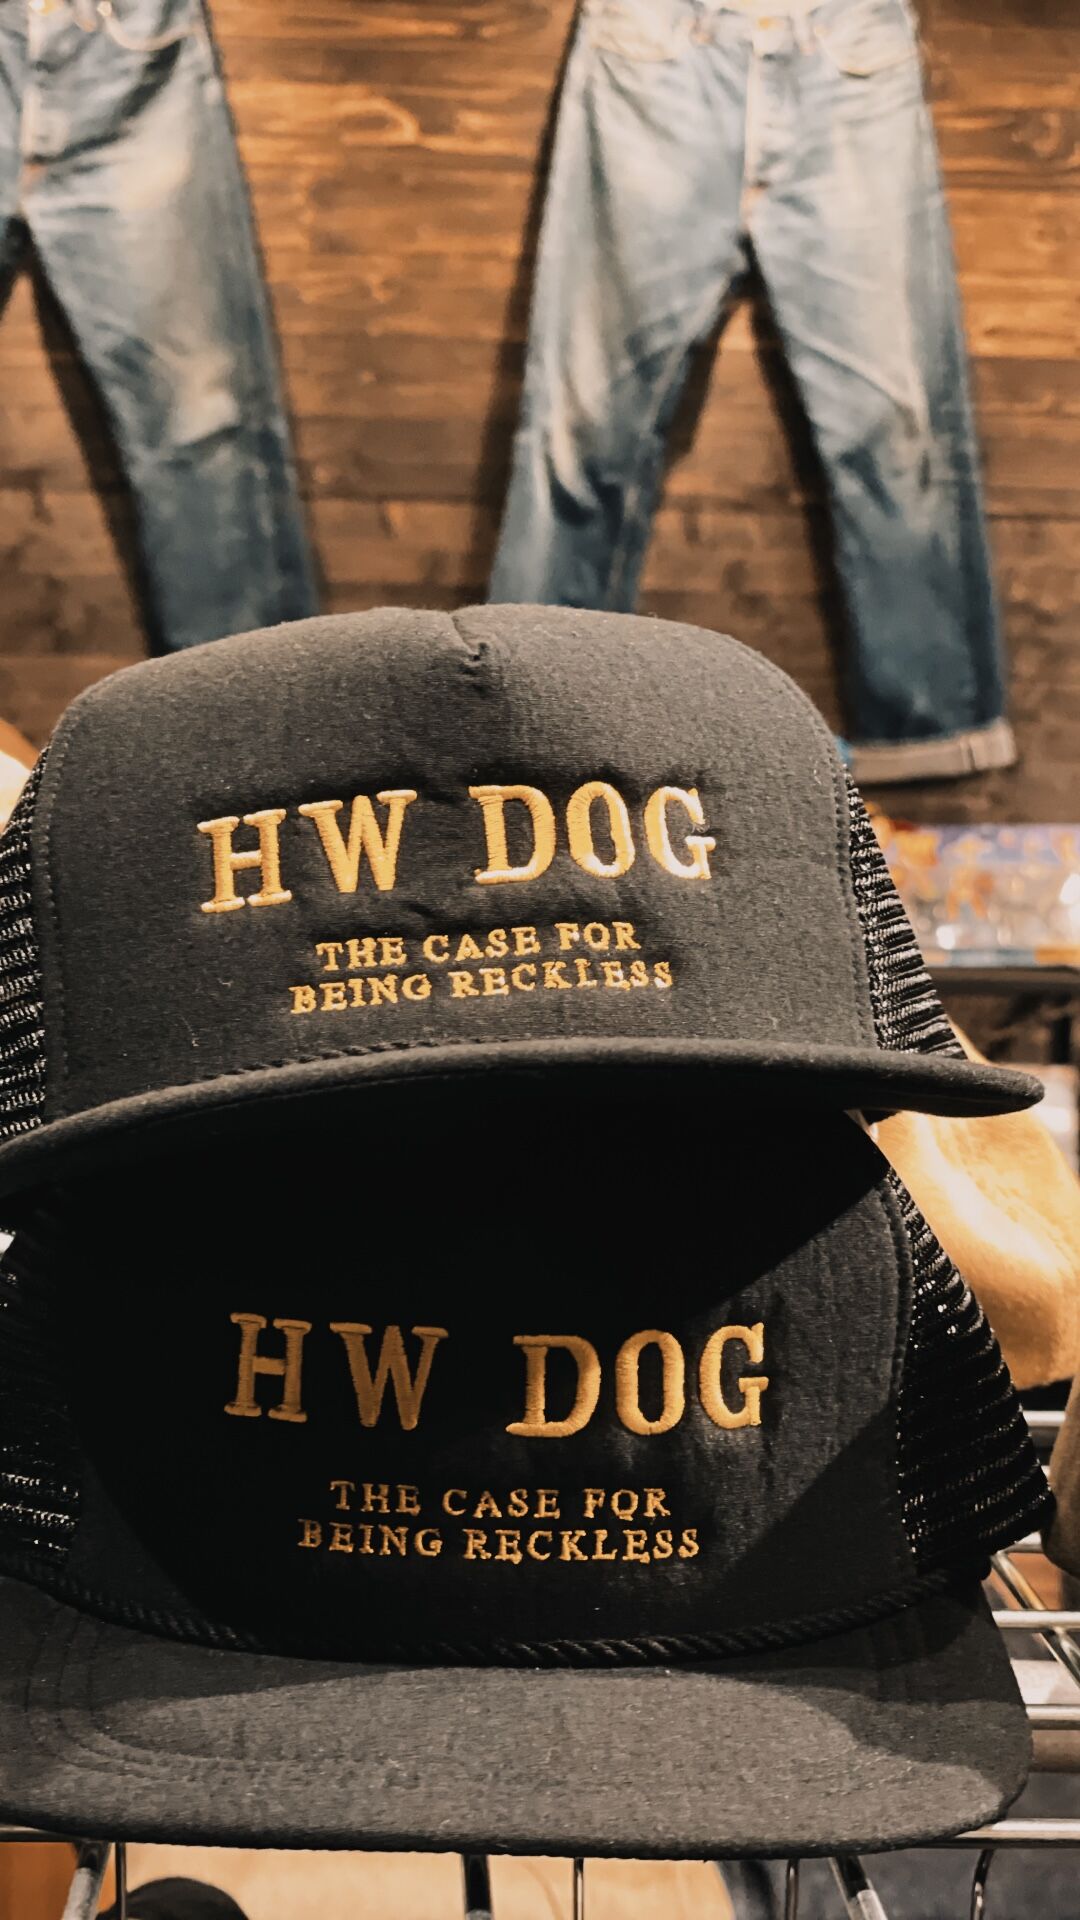 THE H.W DOG&CO MESH CAP 22SS-B